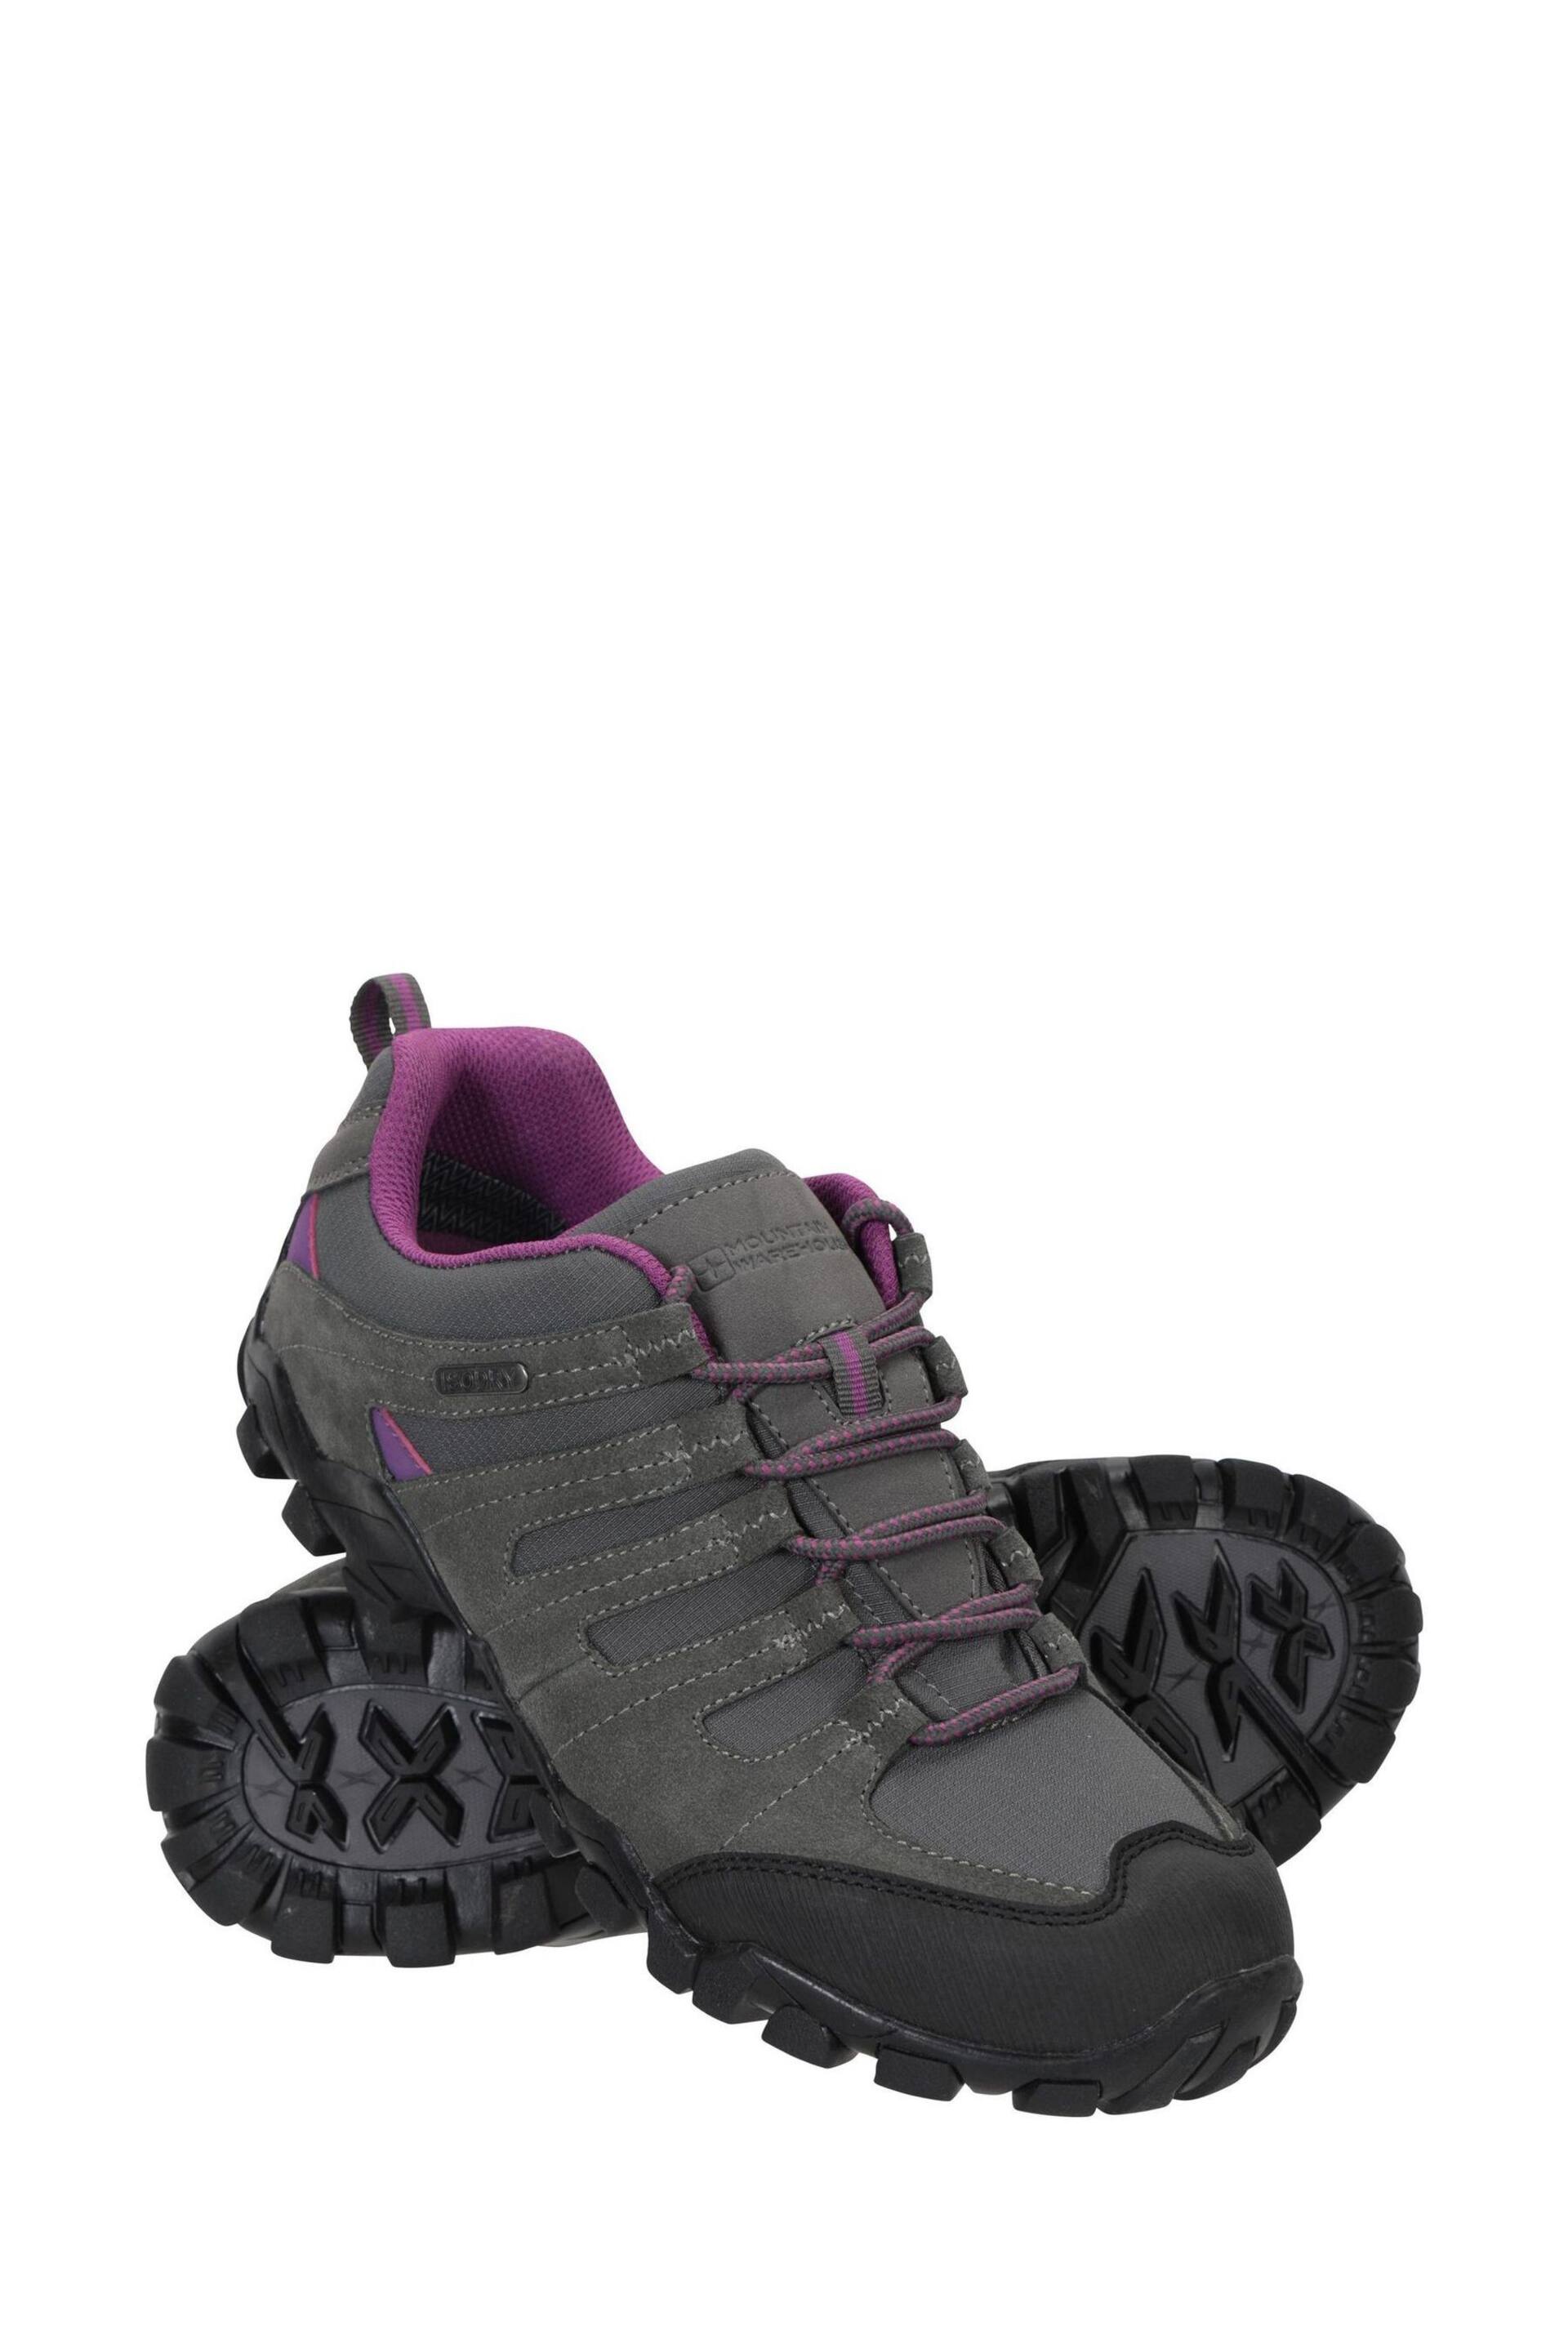 Mountain Warehouse Grey Belfour Outdoor Walking Shoes - Image 3 of 5